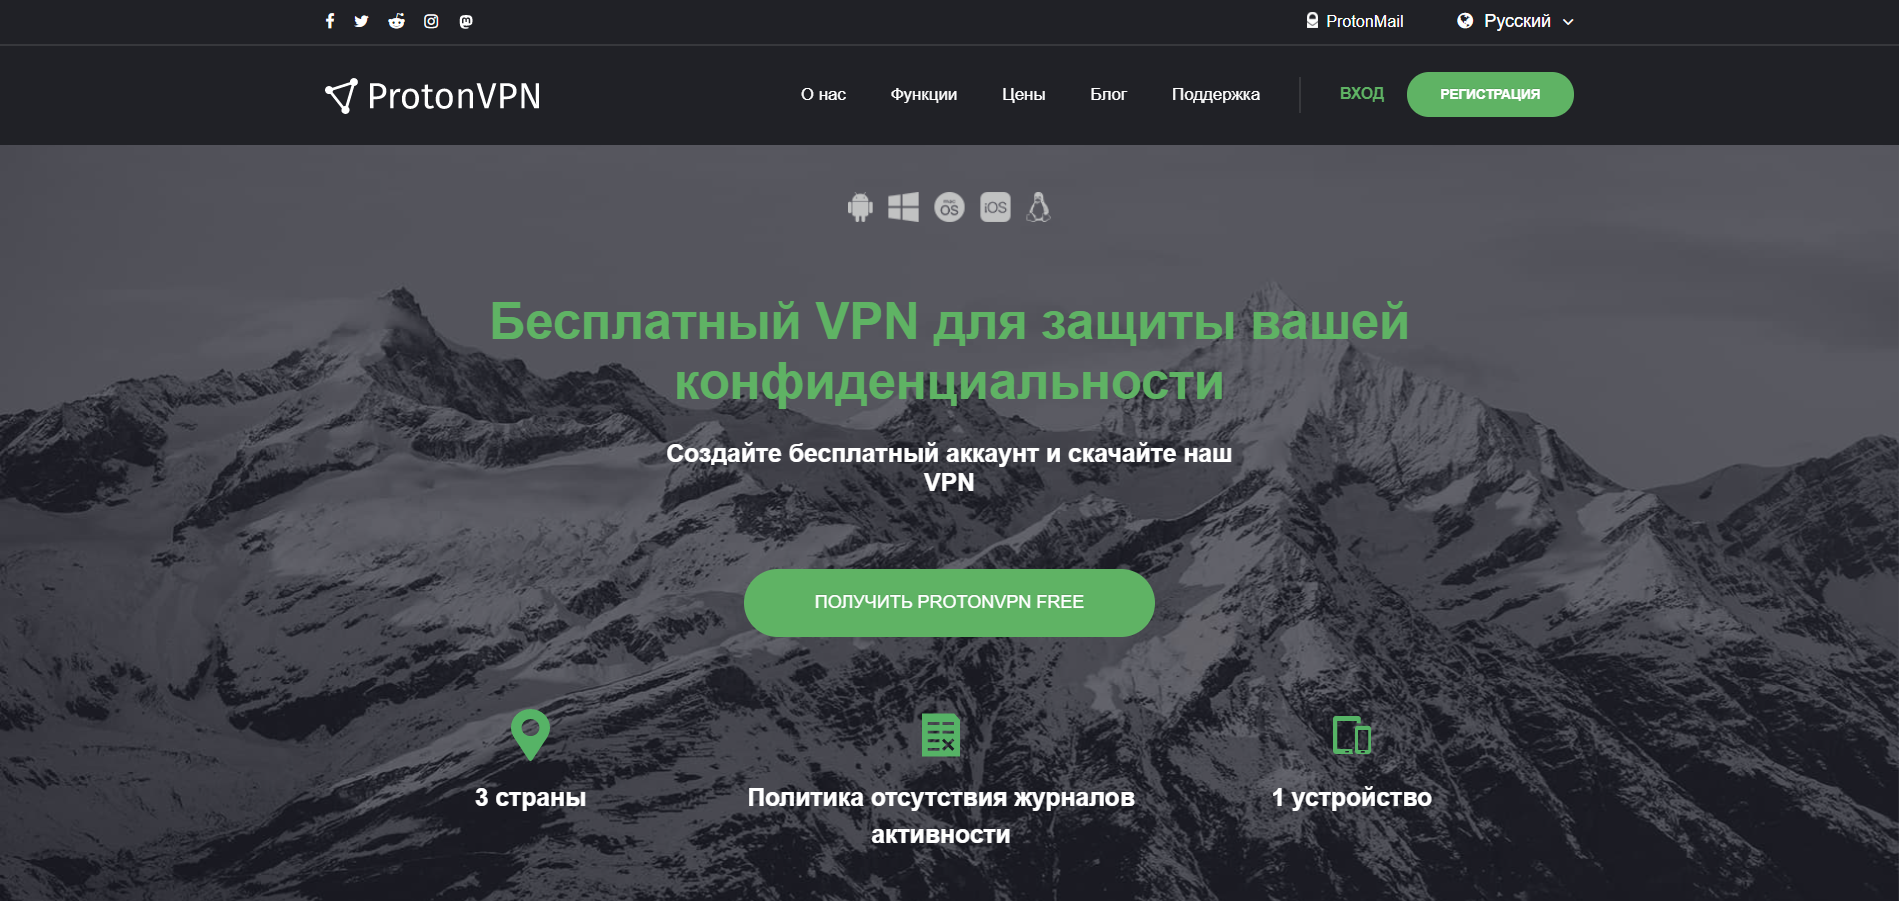 ProtonVPN VPN сервис для Mac и iPhone